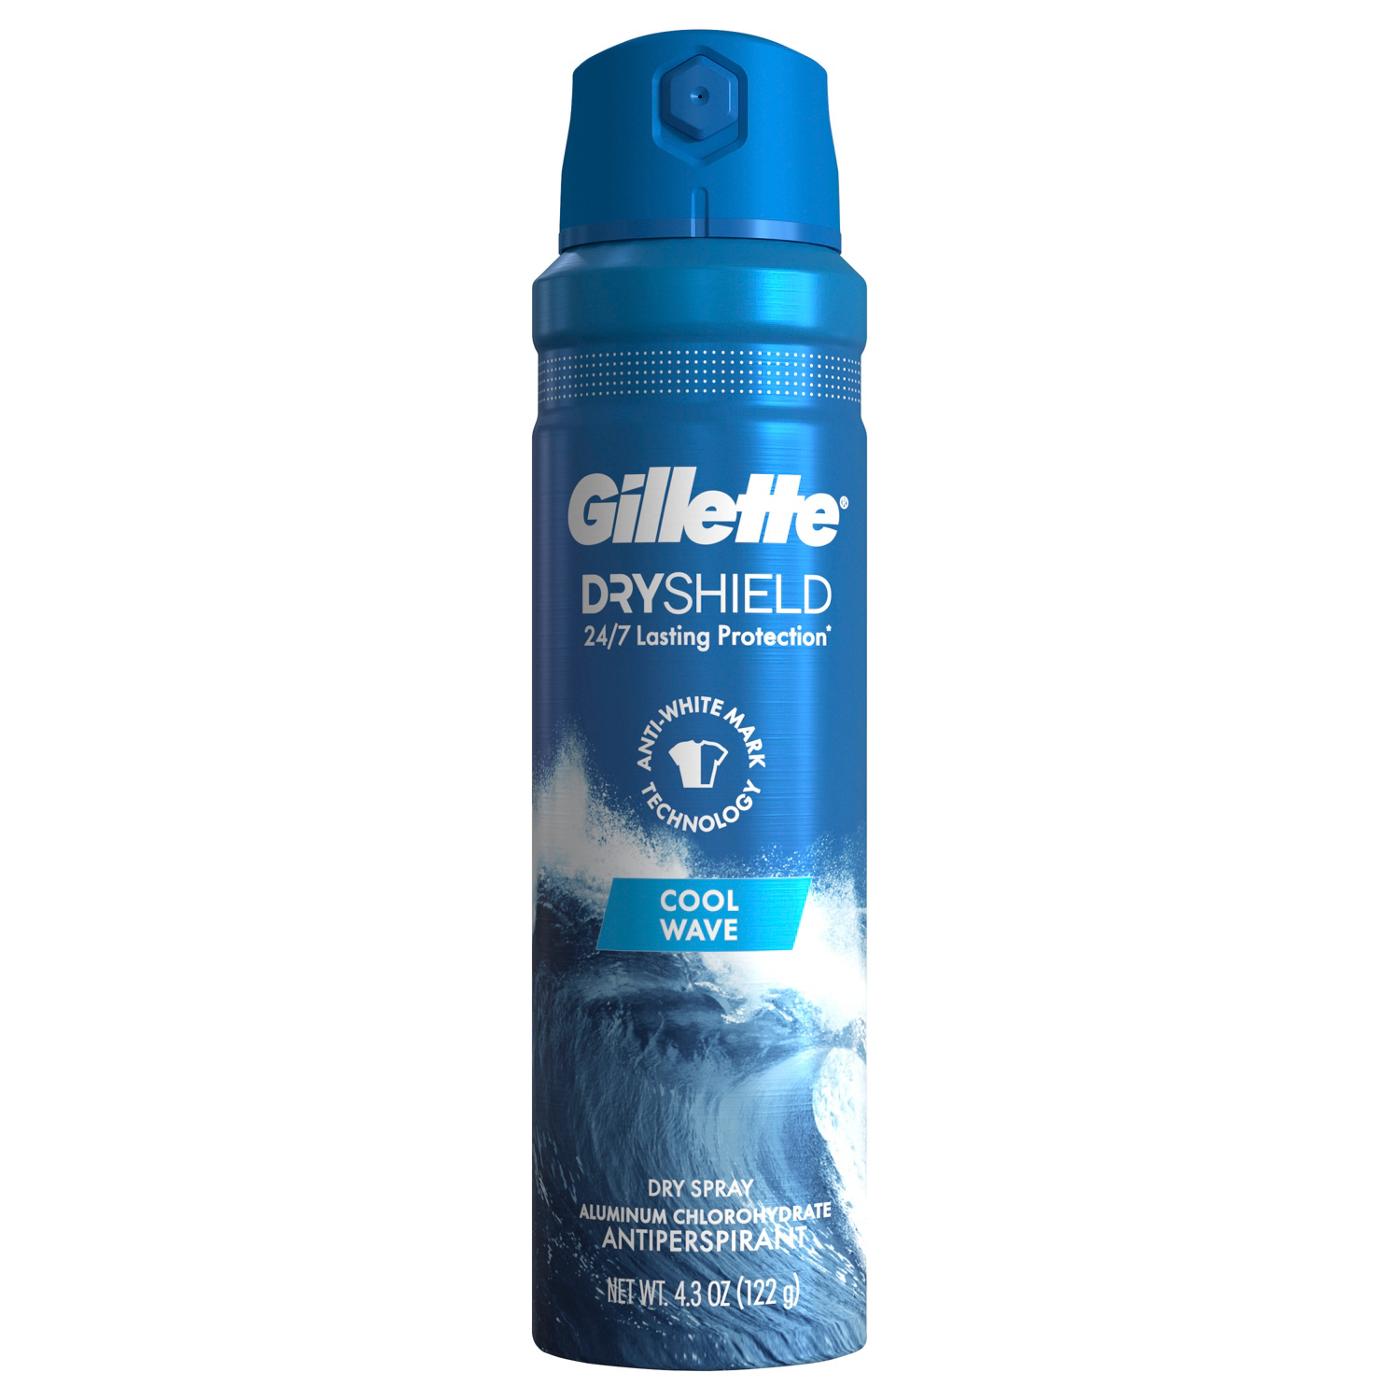 Gillette Dryshield Antiperspirant Dry Spray - Cool Wave; image 1 of 2